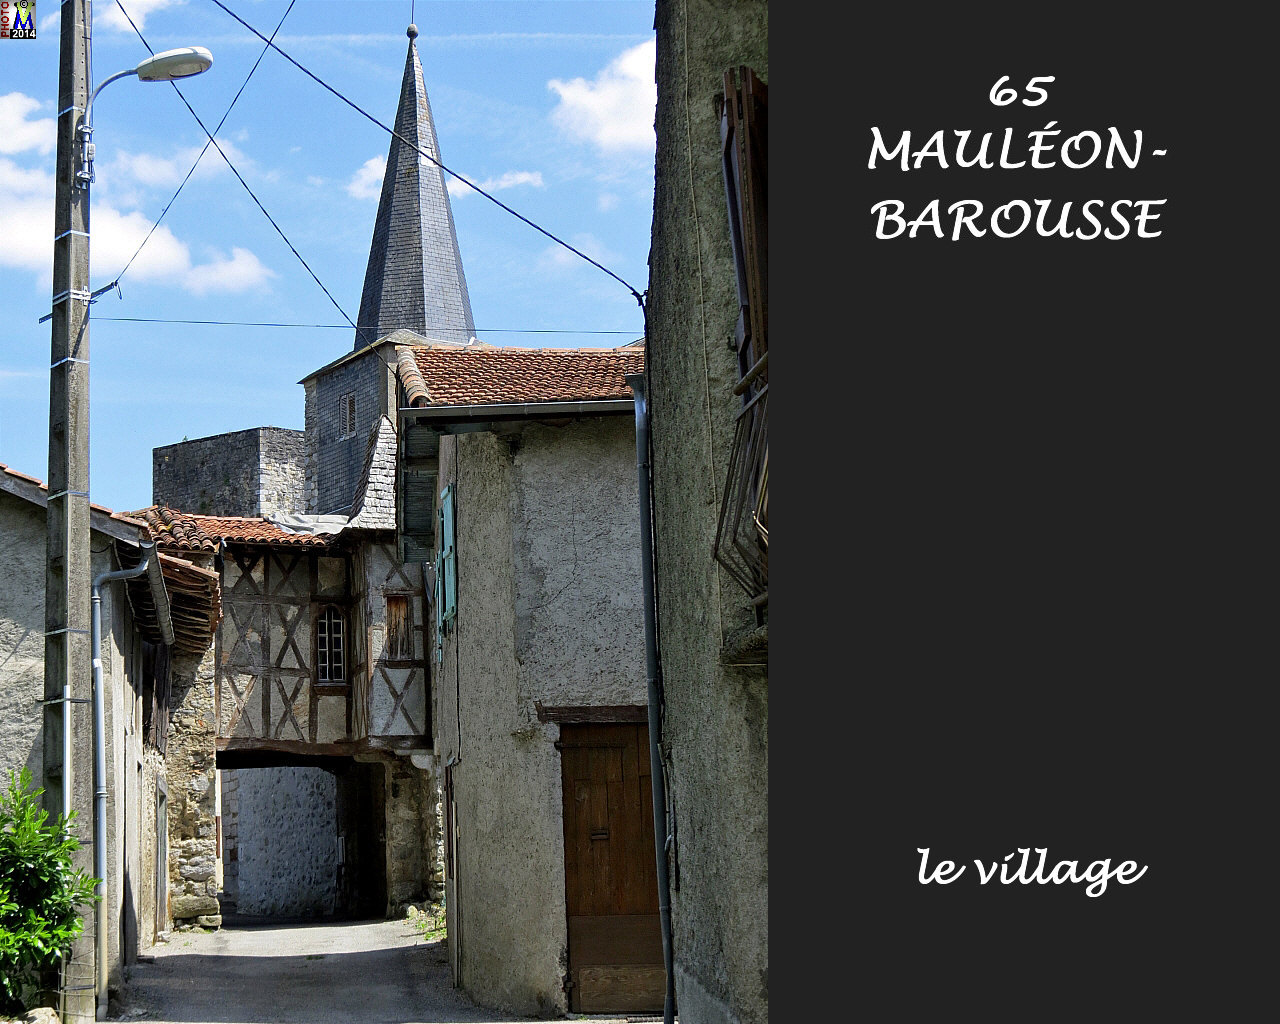 65MAULEON-BAROUSSE_village_106.jpg